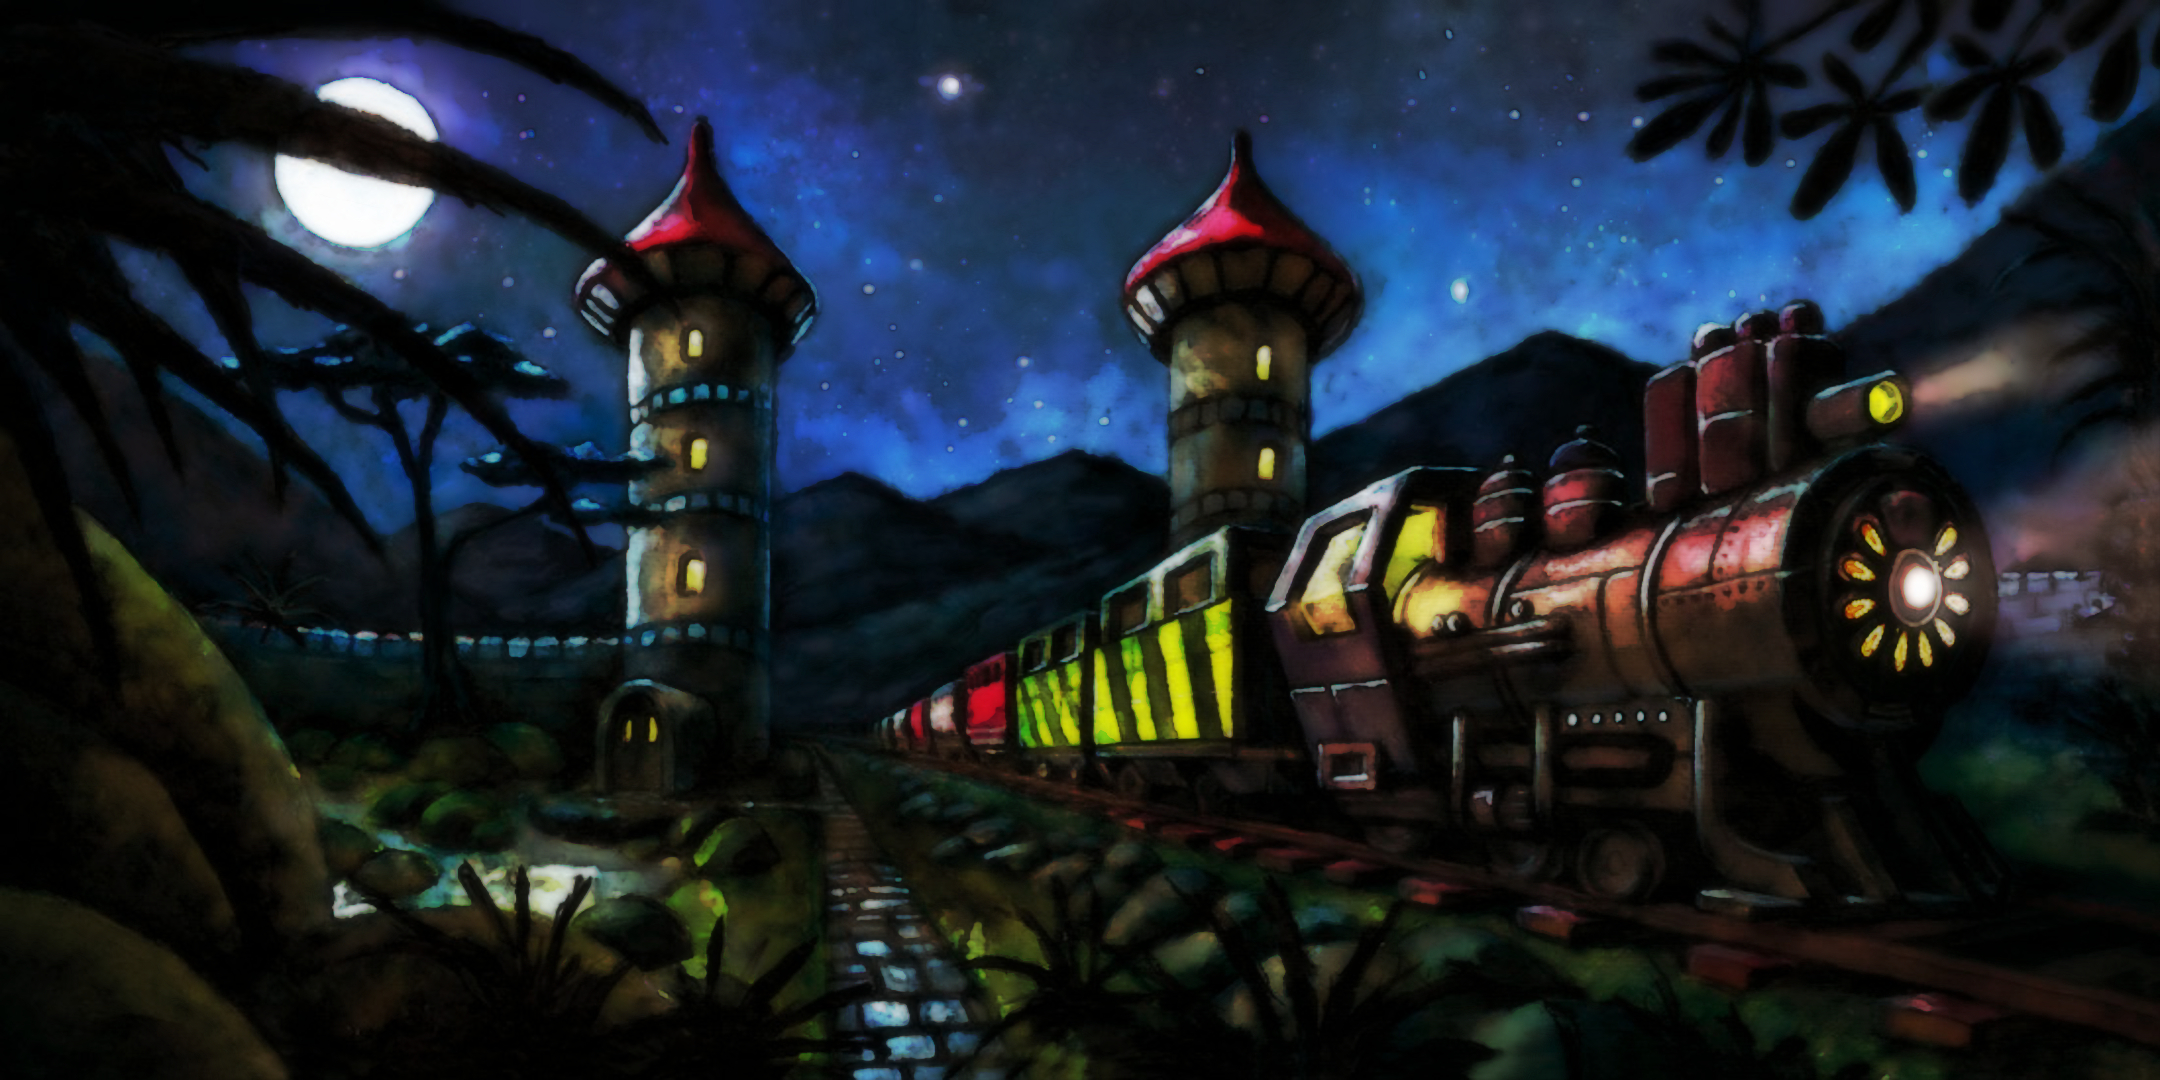 Artistic Train HD Wallpaper | Background Image